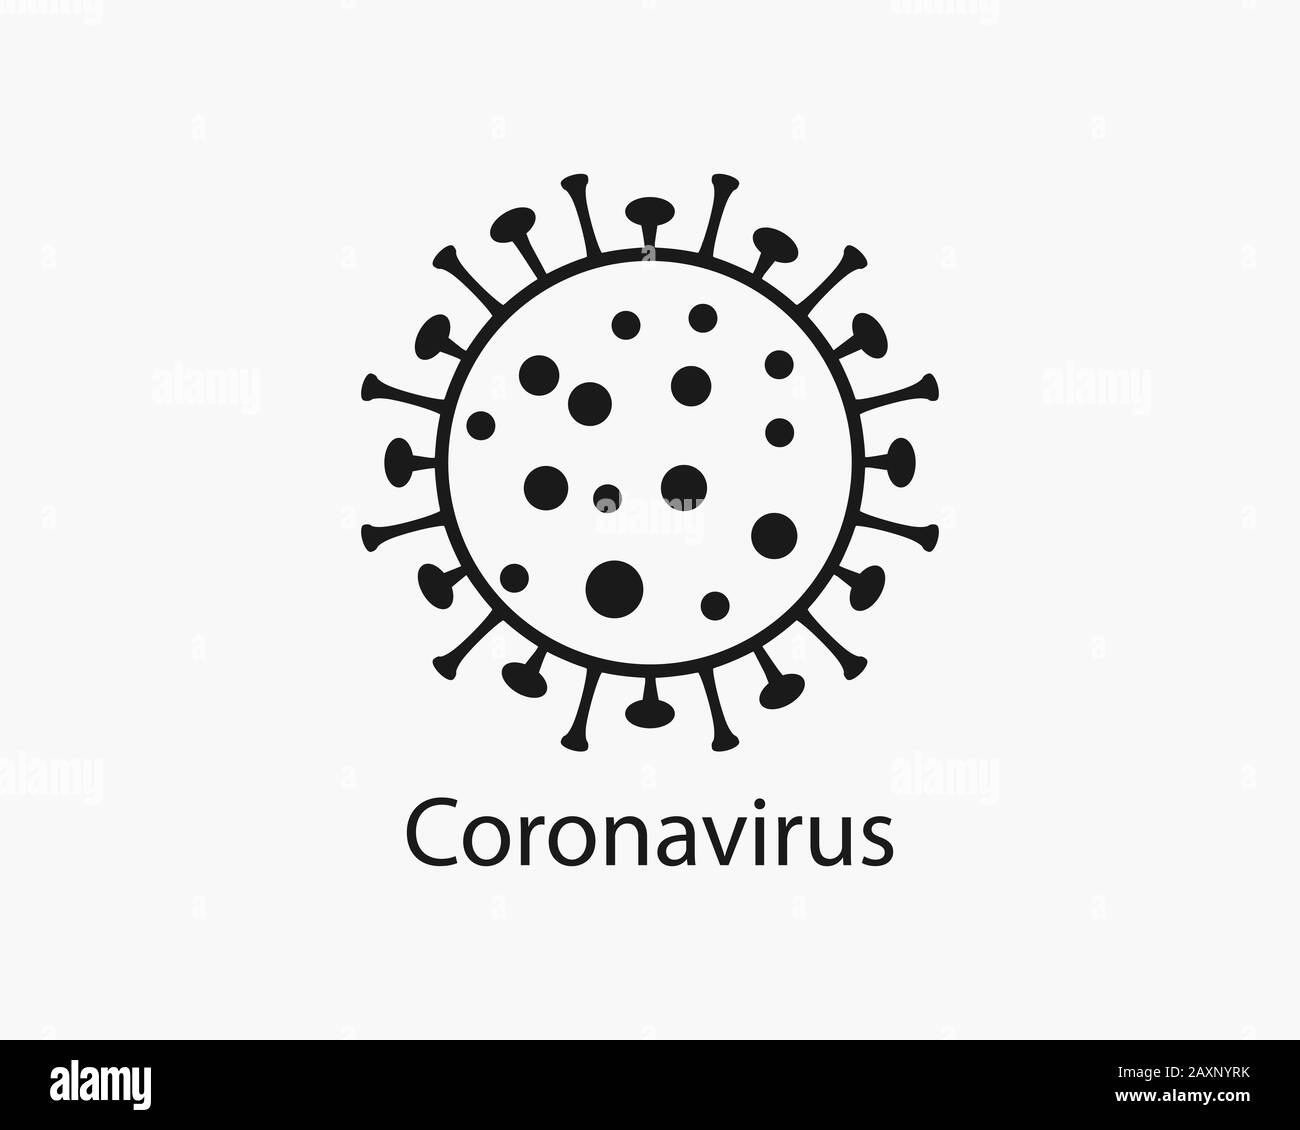 Coronavirus, Grippesymbol. Vektorgrafiken, flaches Design. Stock Vektor